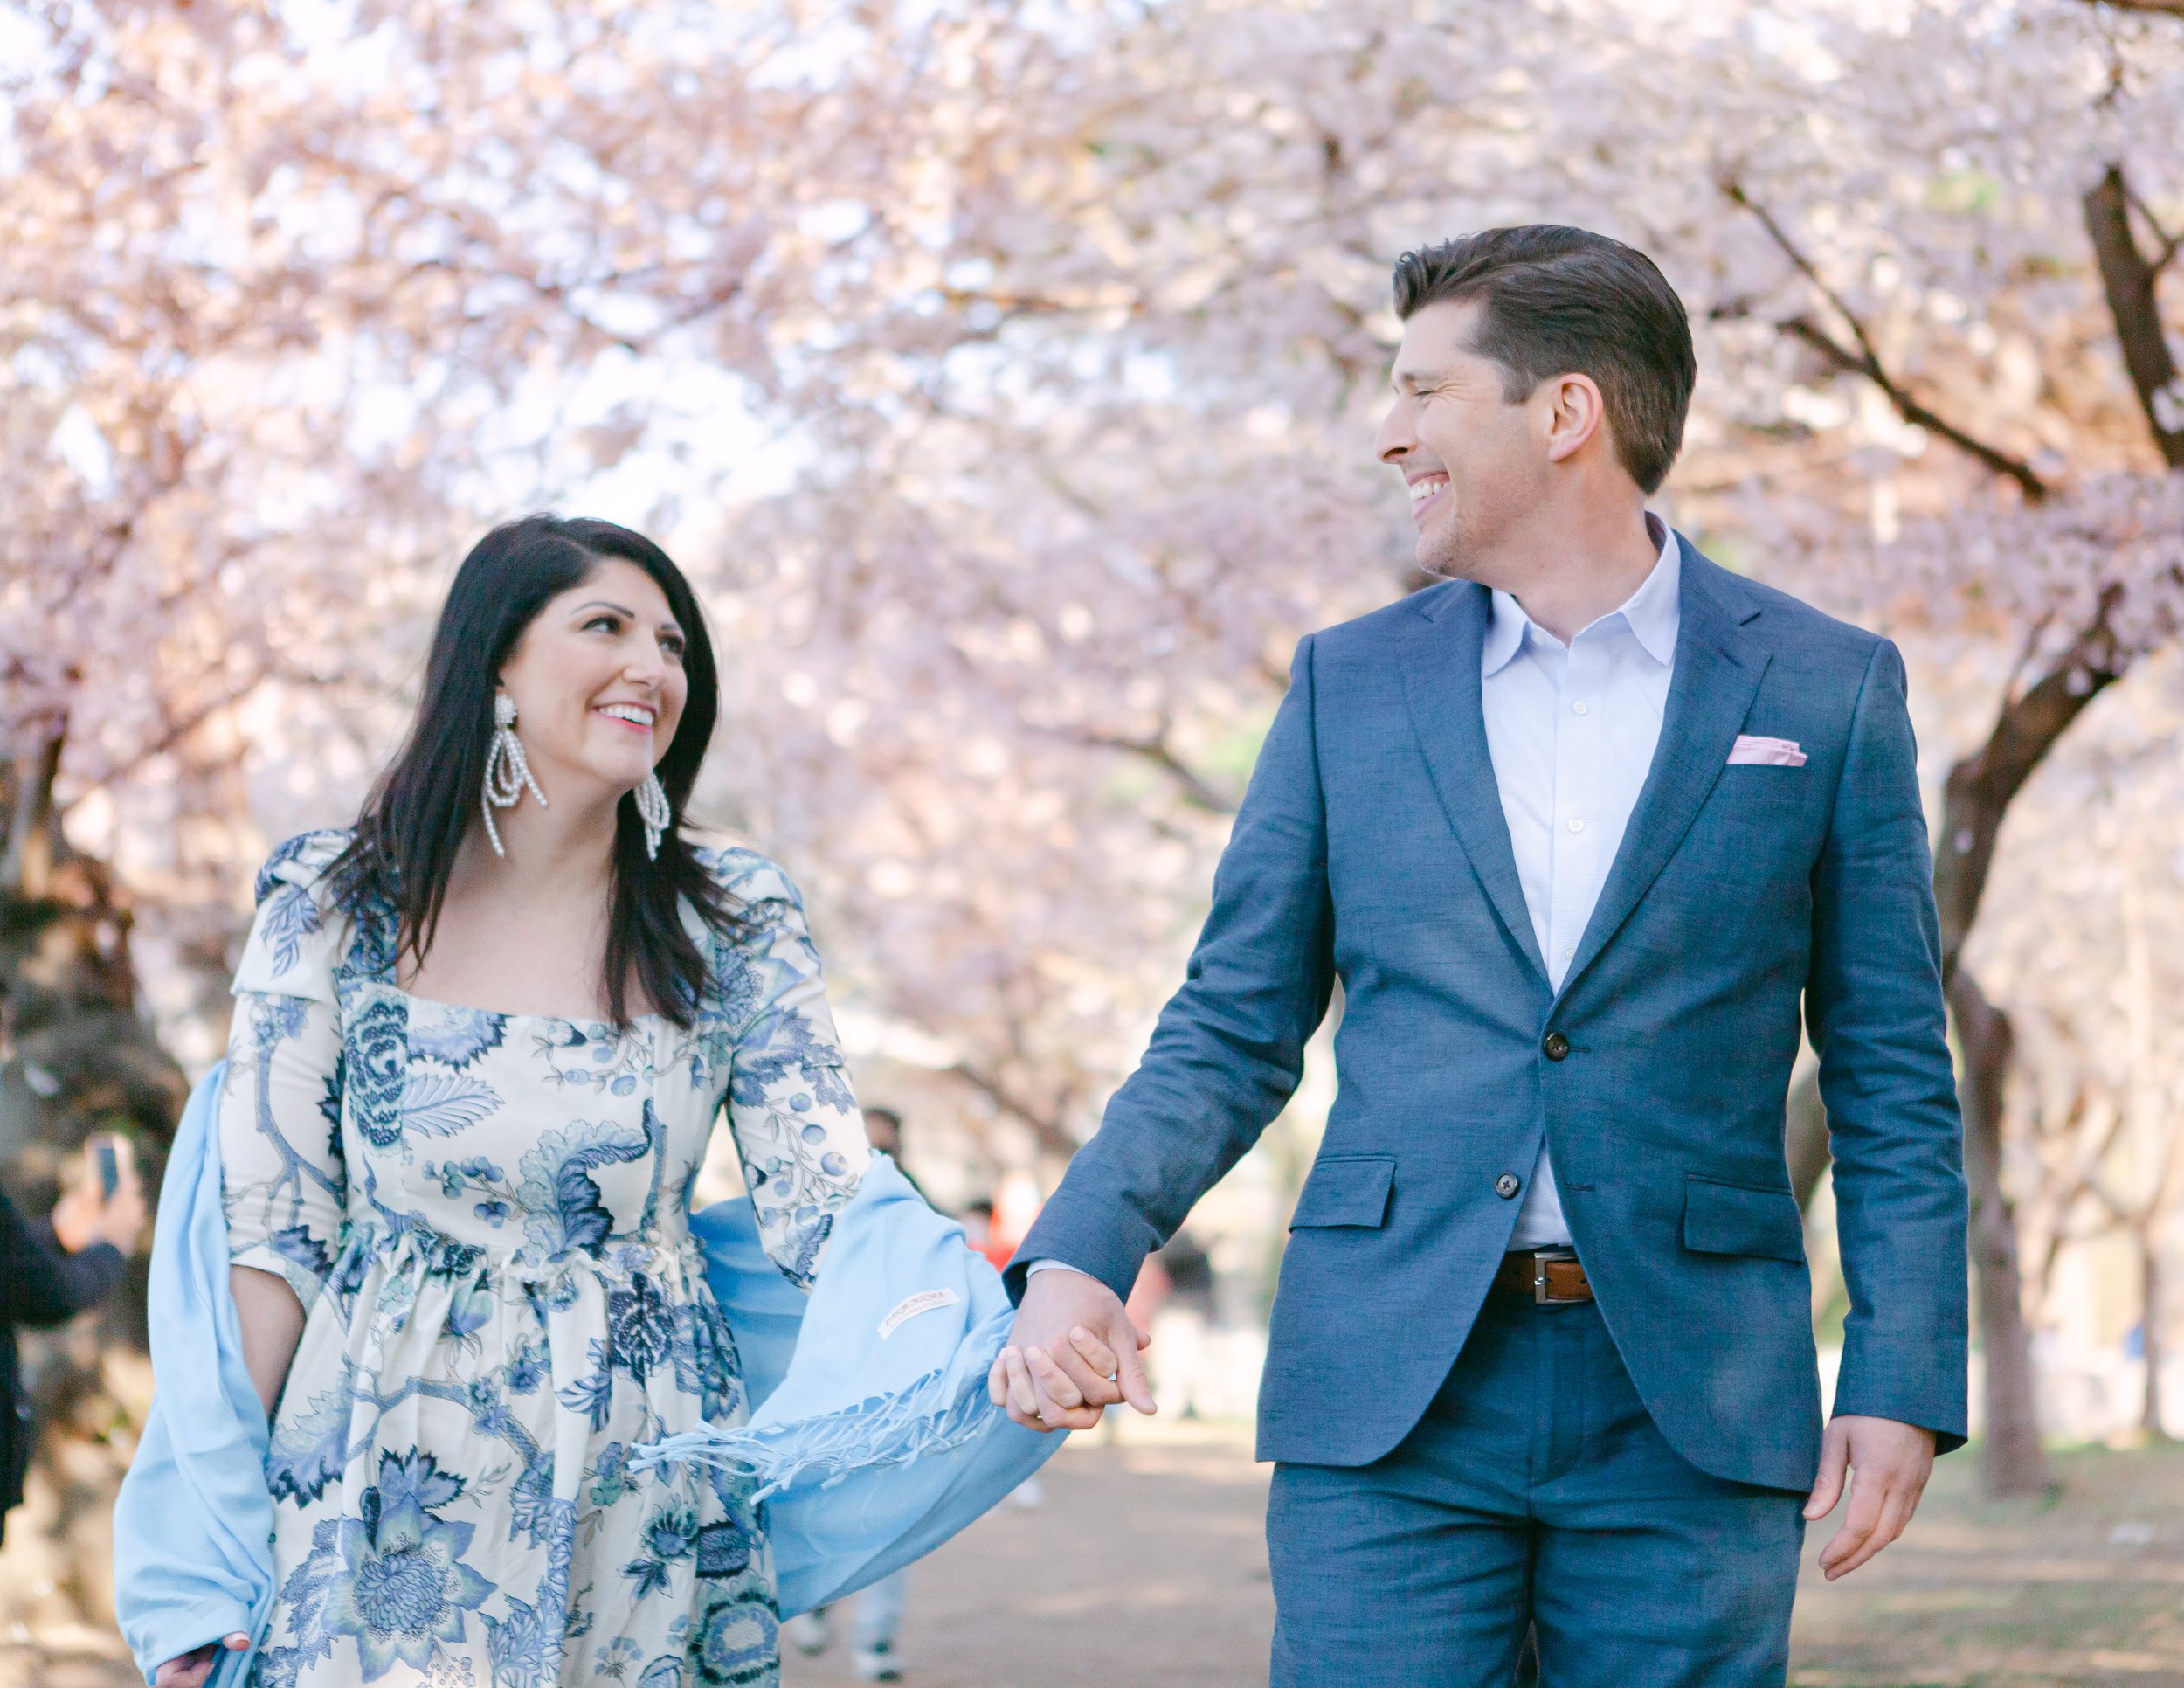 Amy & Trevor Cherry Blossom Proposal 2021 - 033.jpg